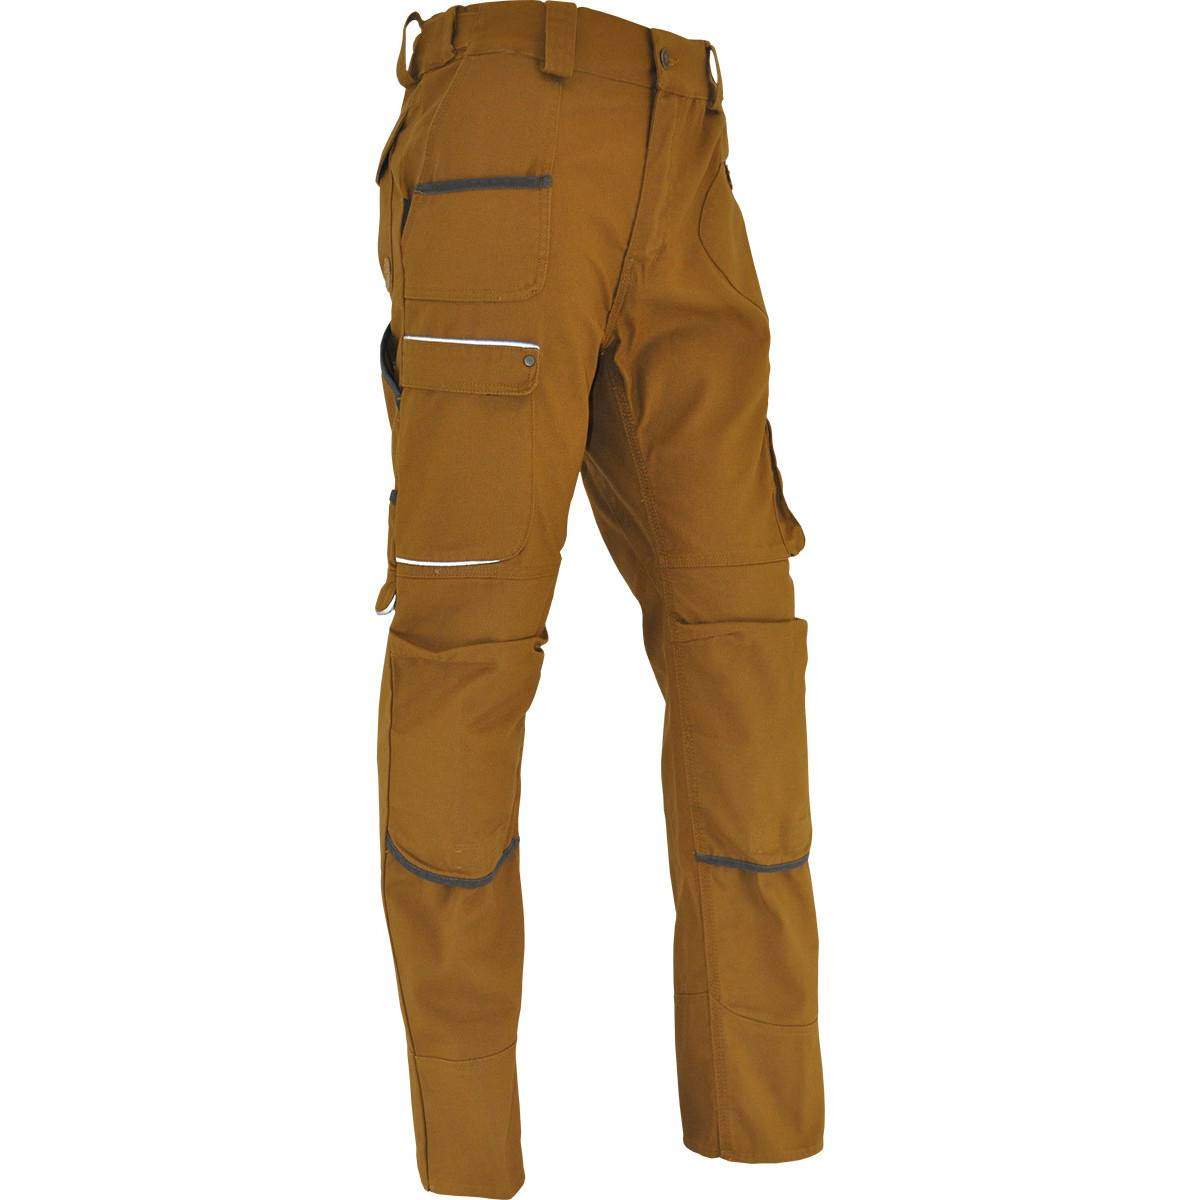 SAHARA work trousers size 44, bronze